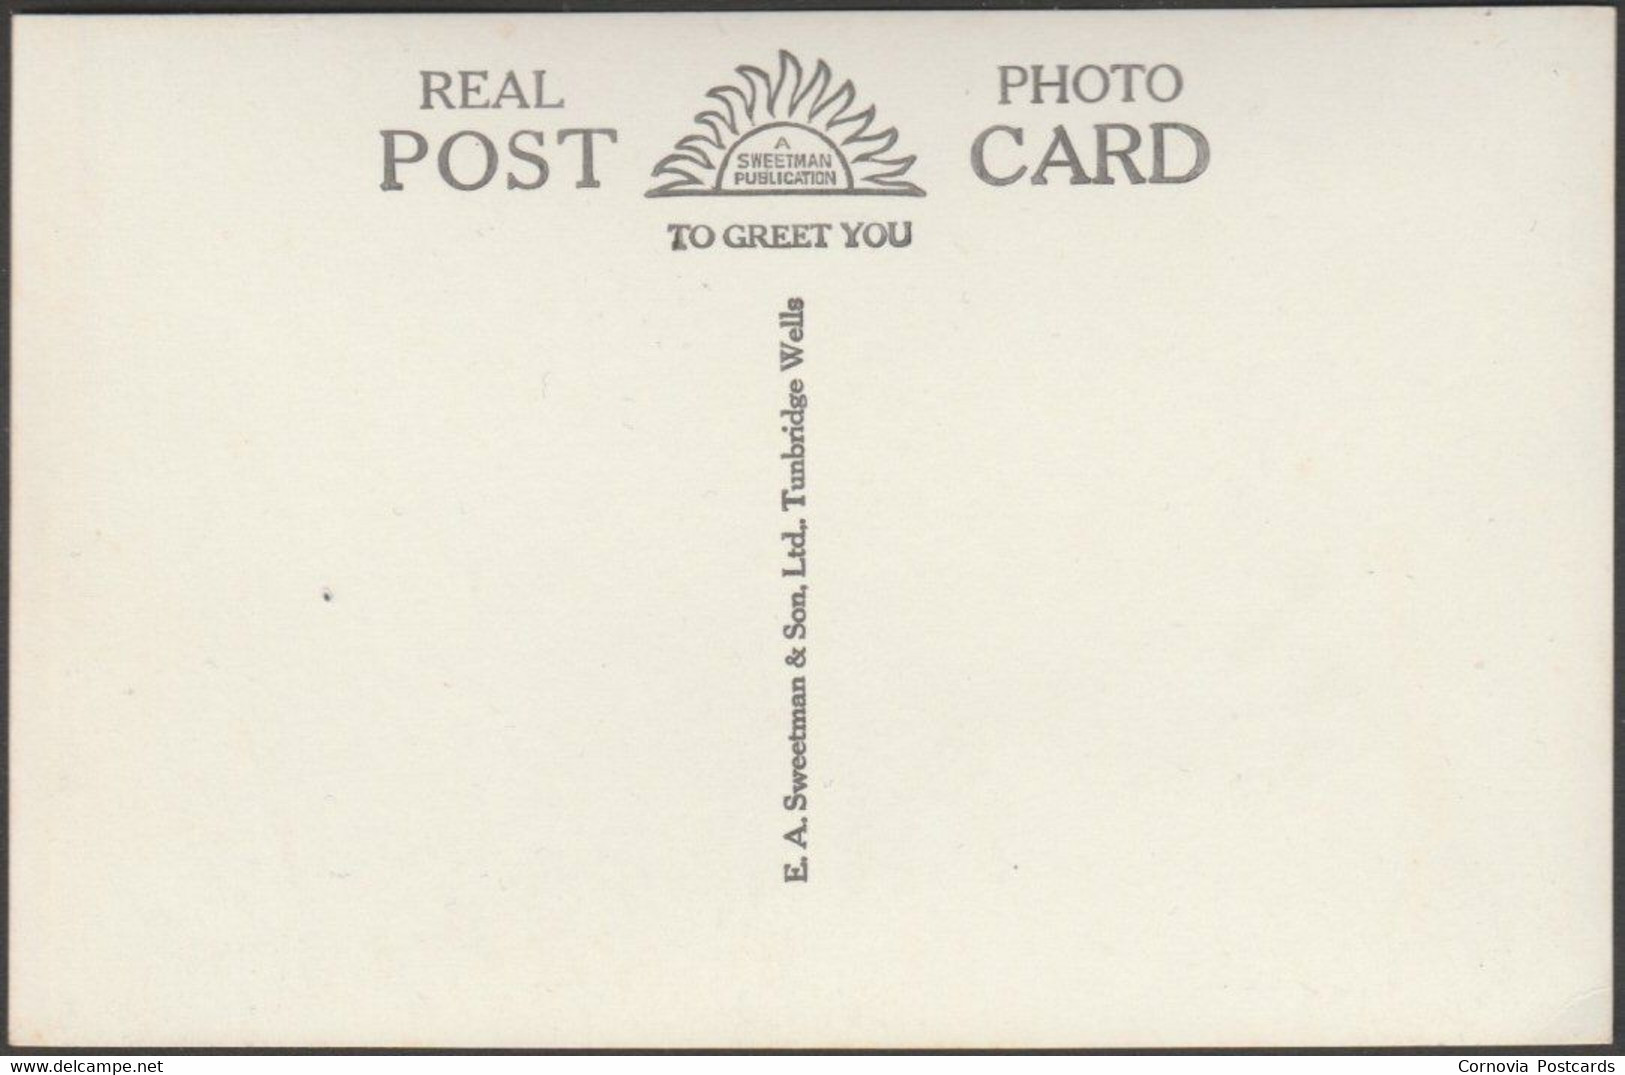 Douglas Pinder - Porth, Near Newquay, Cornwall, C.1940 - Sweetman RP Postcard - Newquay